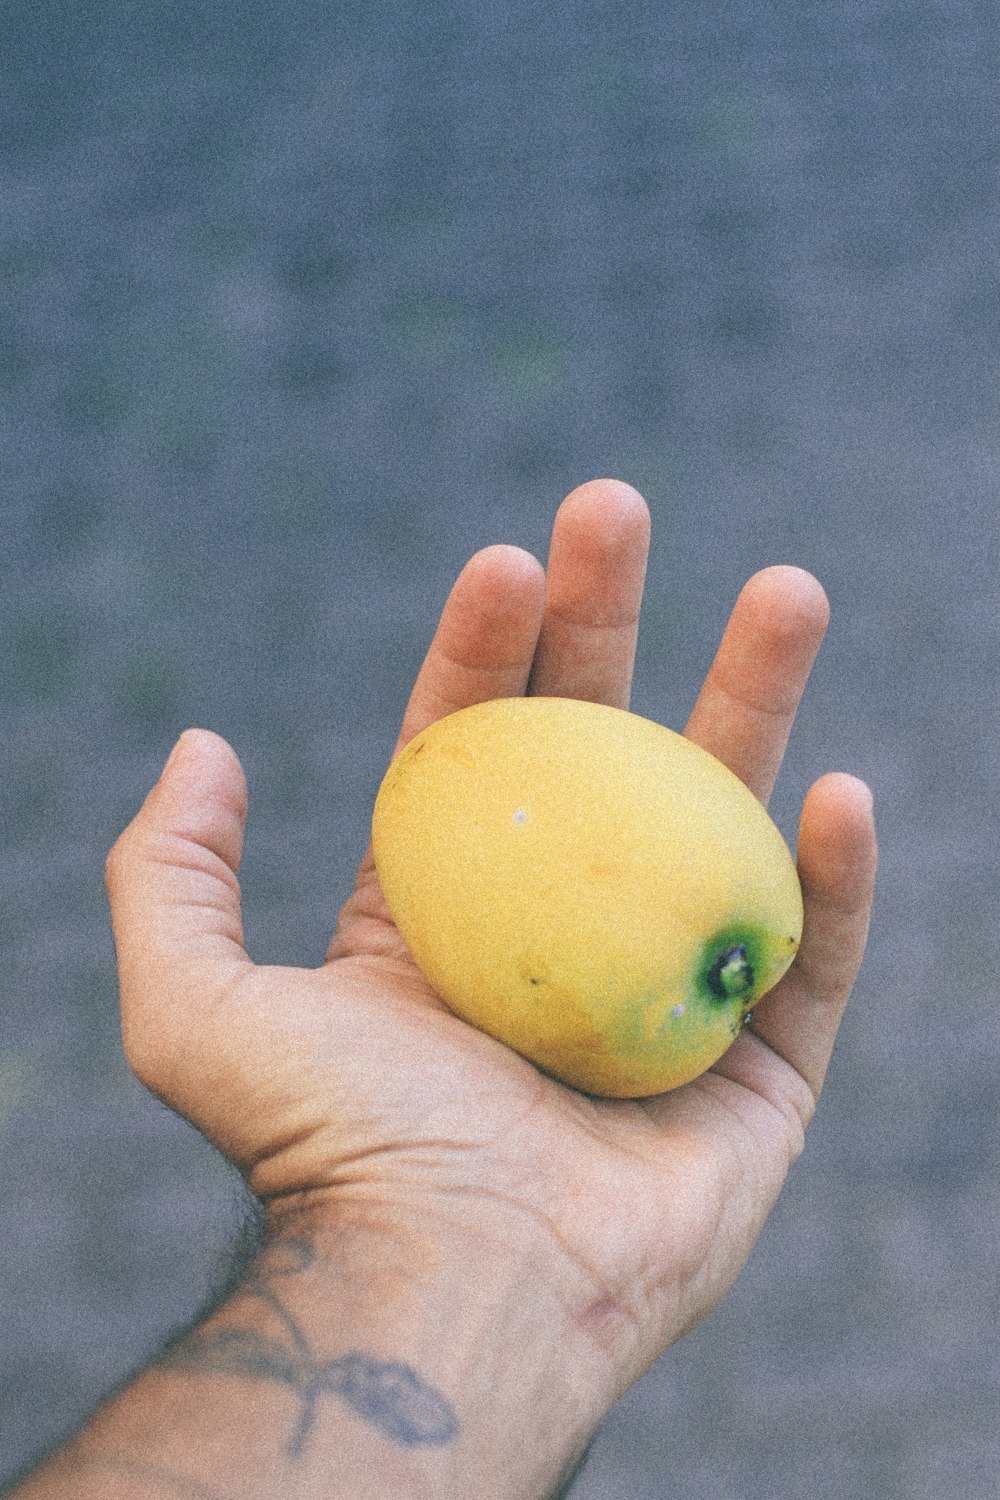 yellow lemon on persons hand